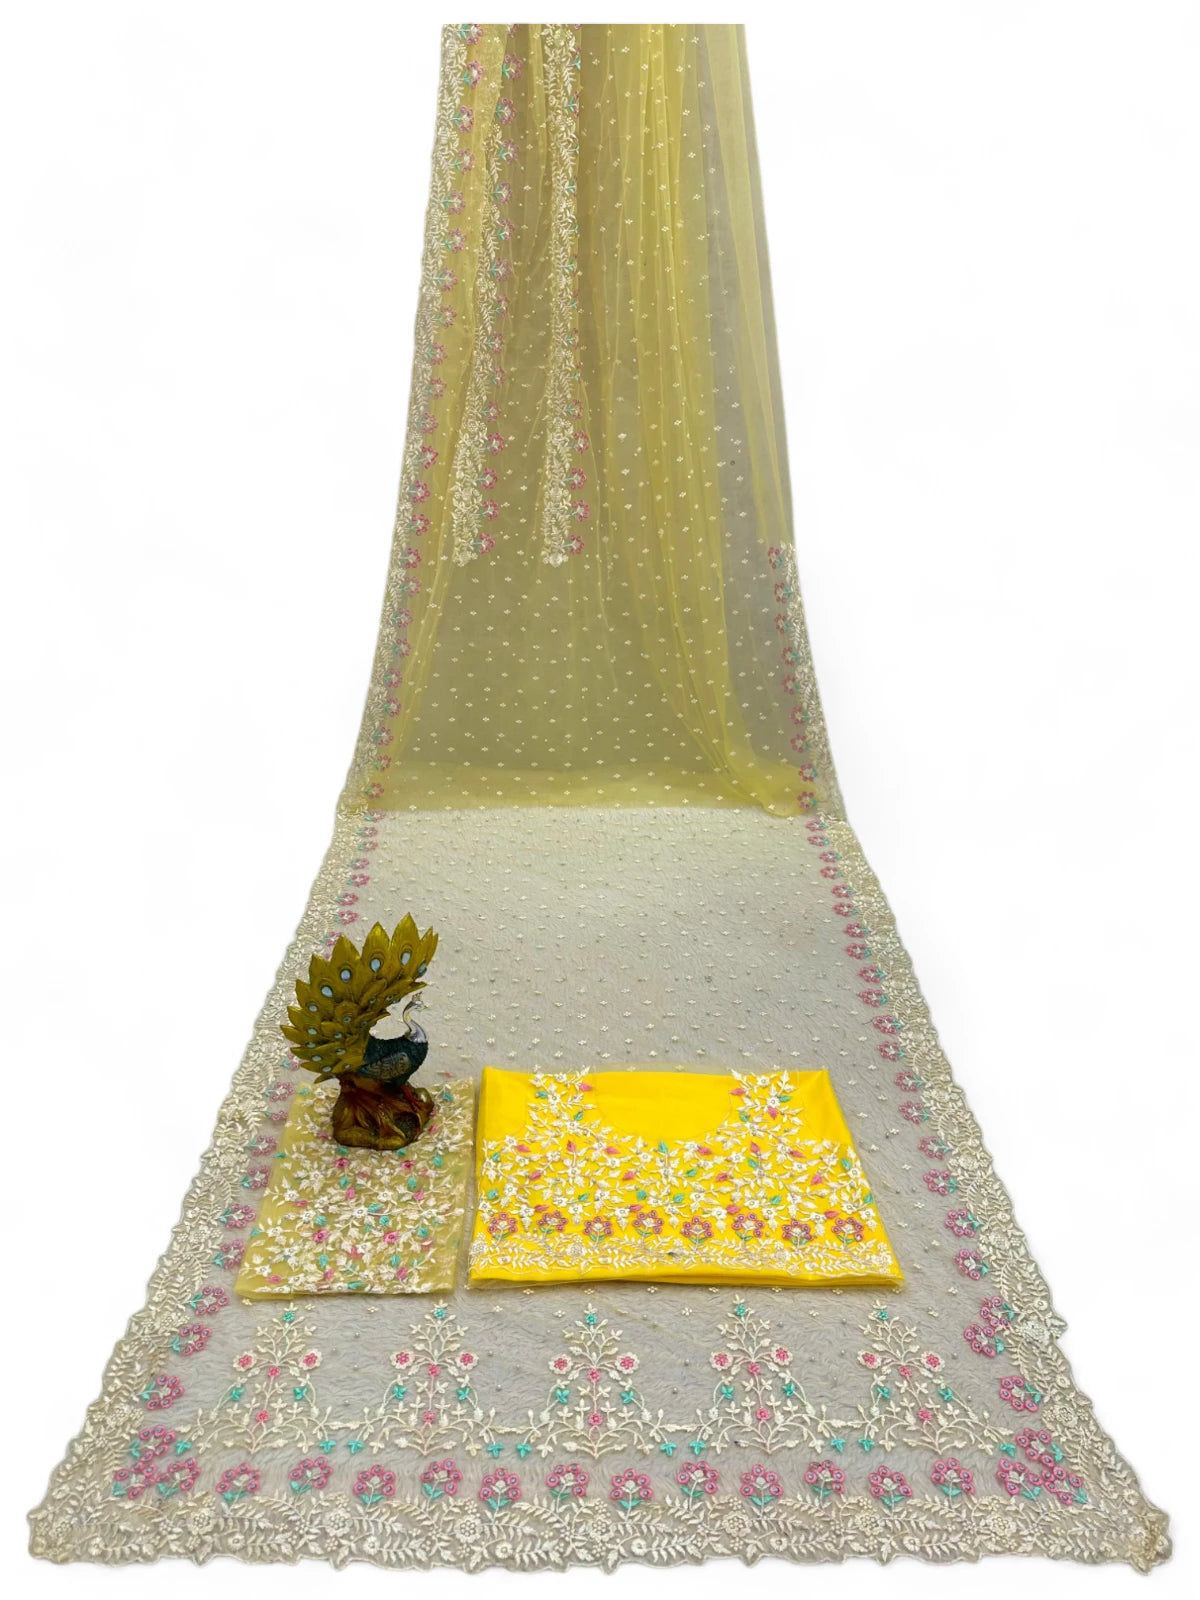 Yellow soft net designer ceremonial saree